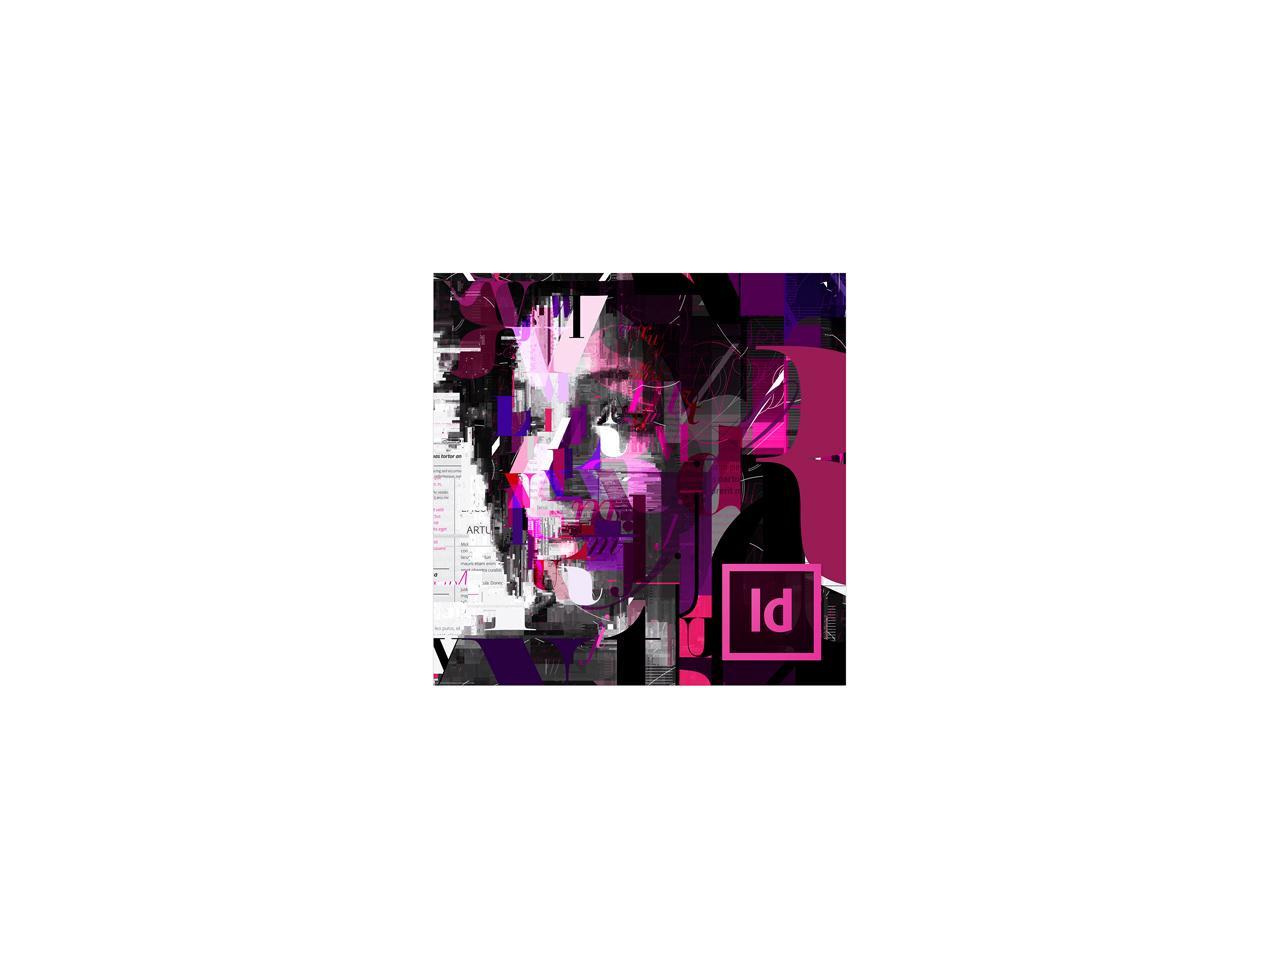 Adobe Photoshop CS6图像设计与制作技能实训教程_科学商城——科学出版社官网